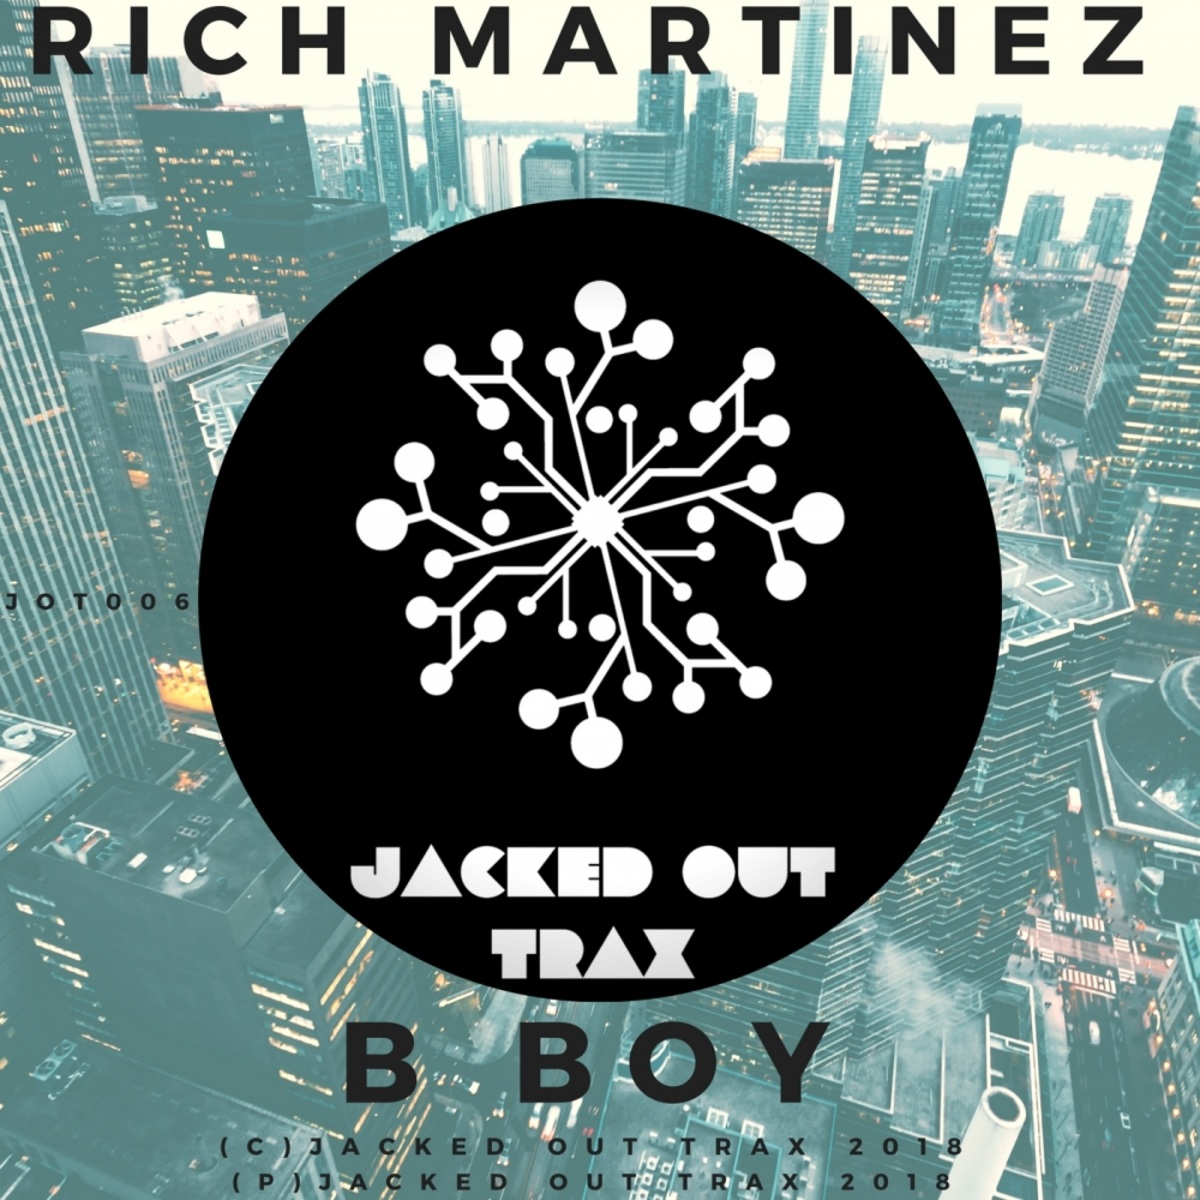 Rich Martinez - B Boy / Jacked Out Trax